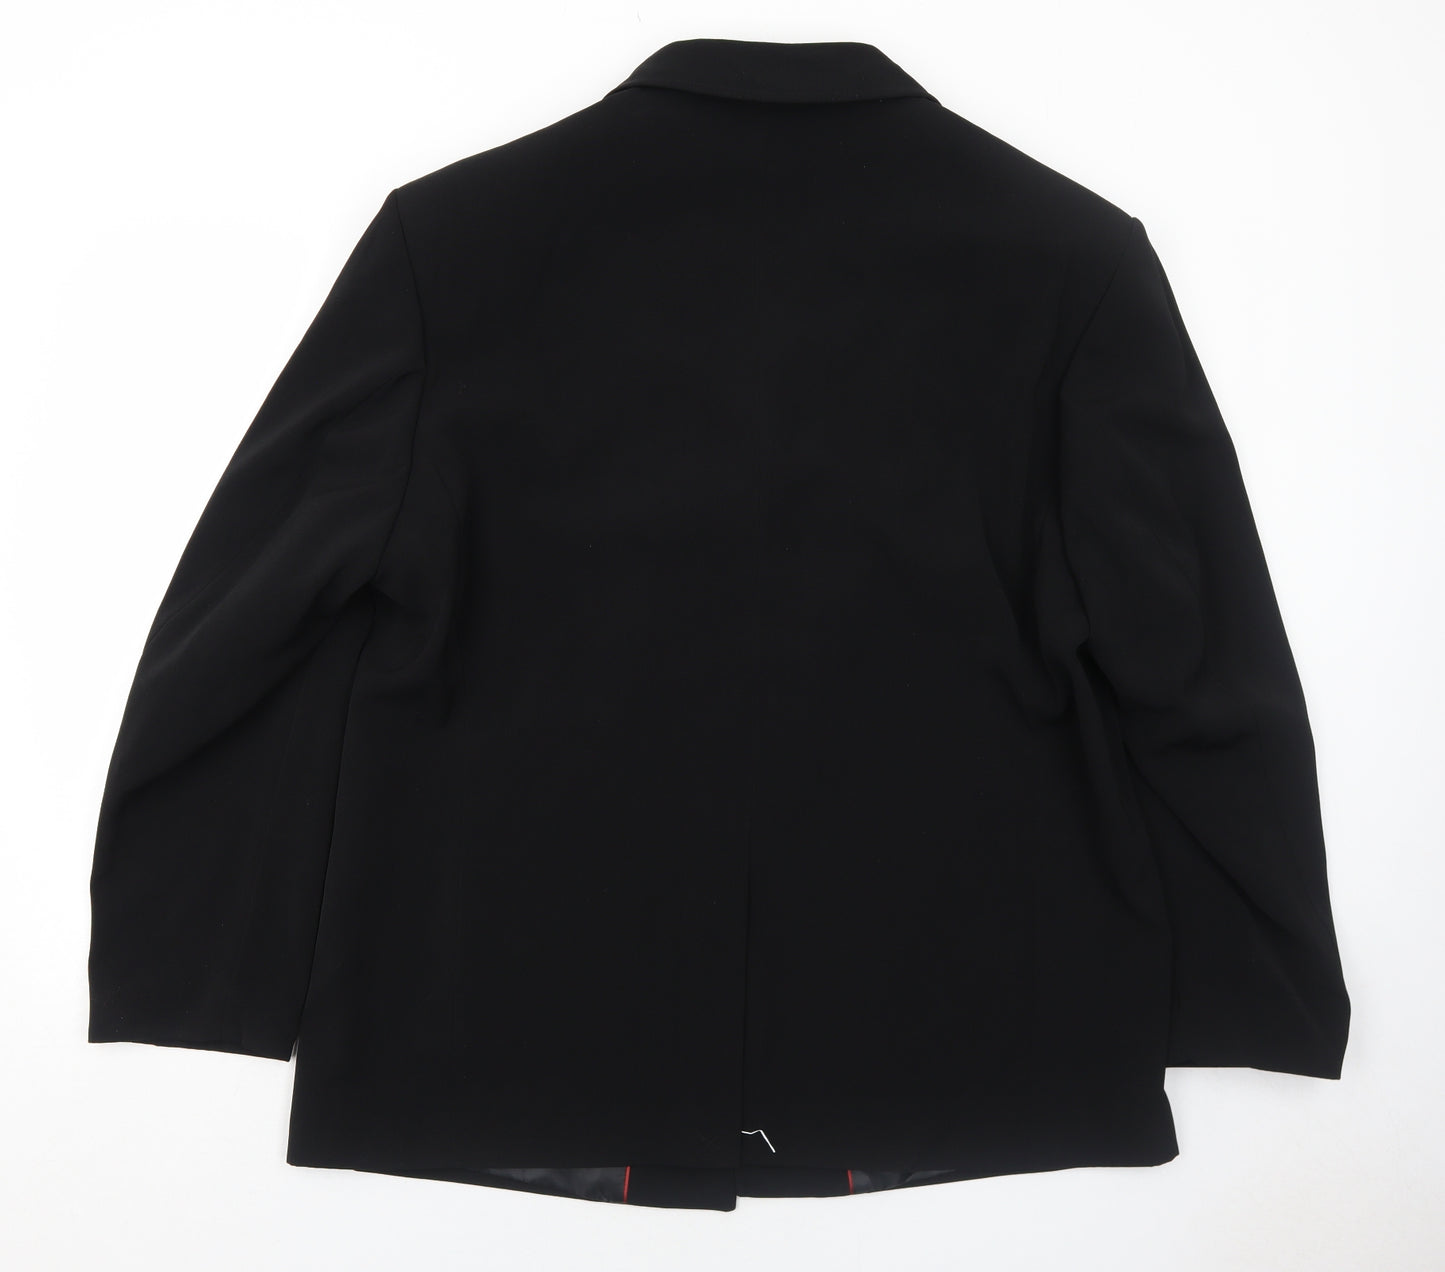 Skopes Mens Black Polyester Jacket Blazer Size 46 Regular